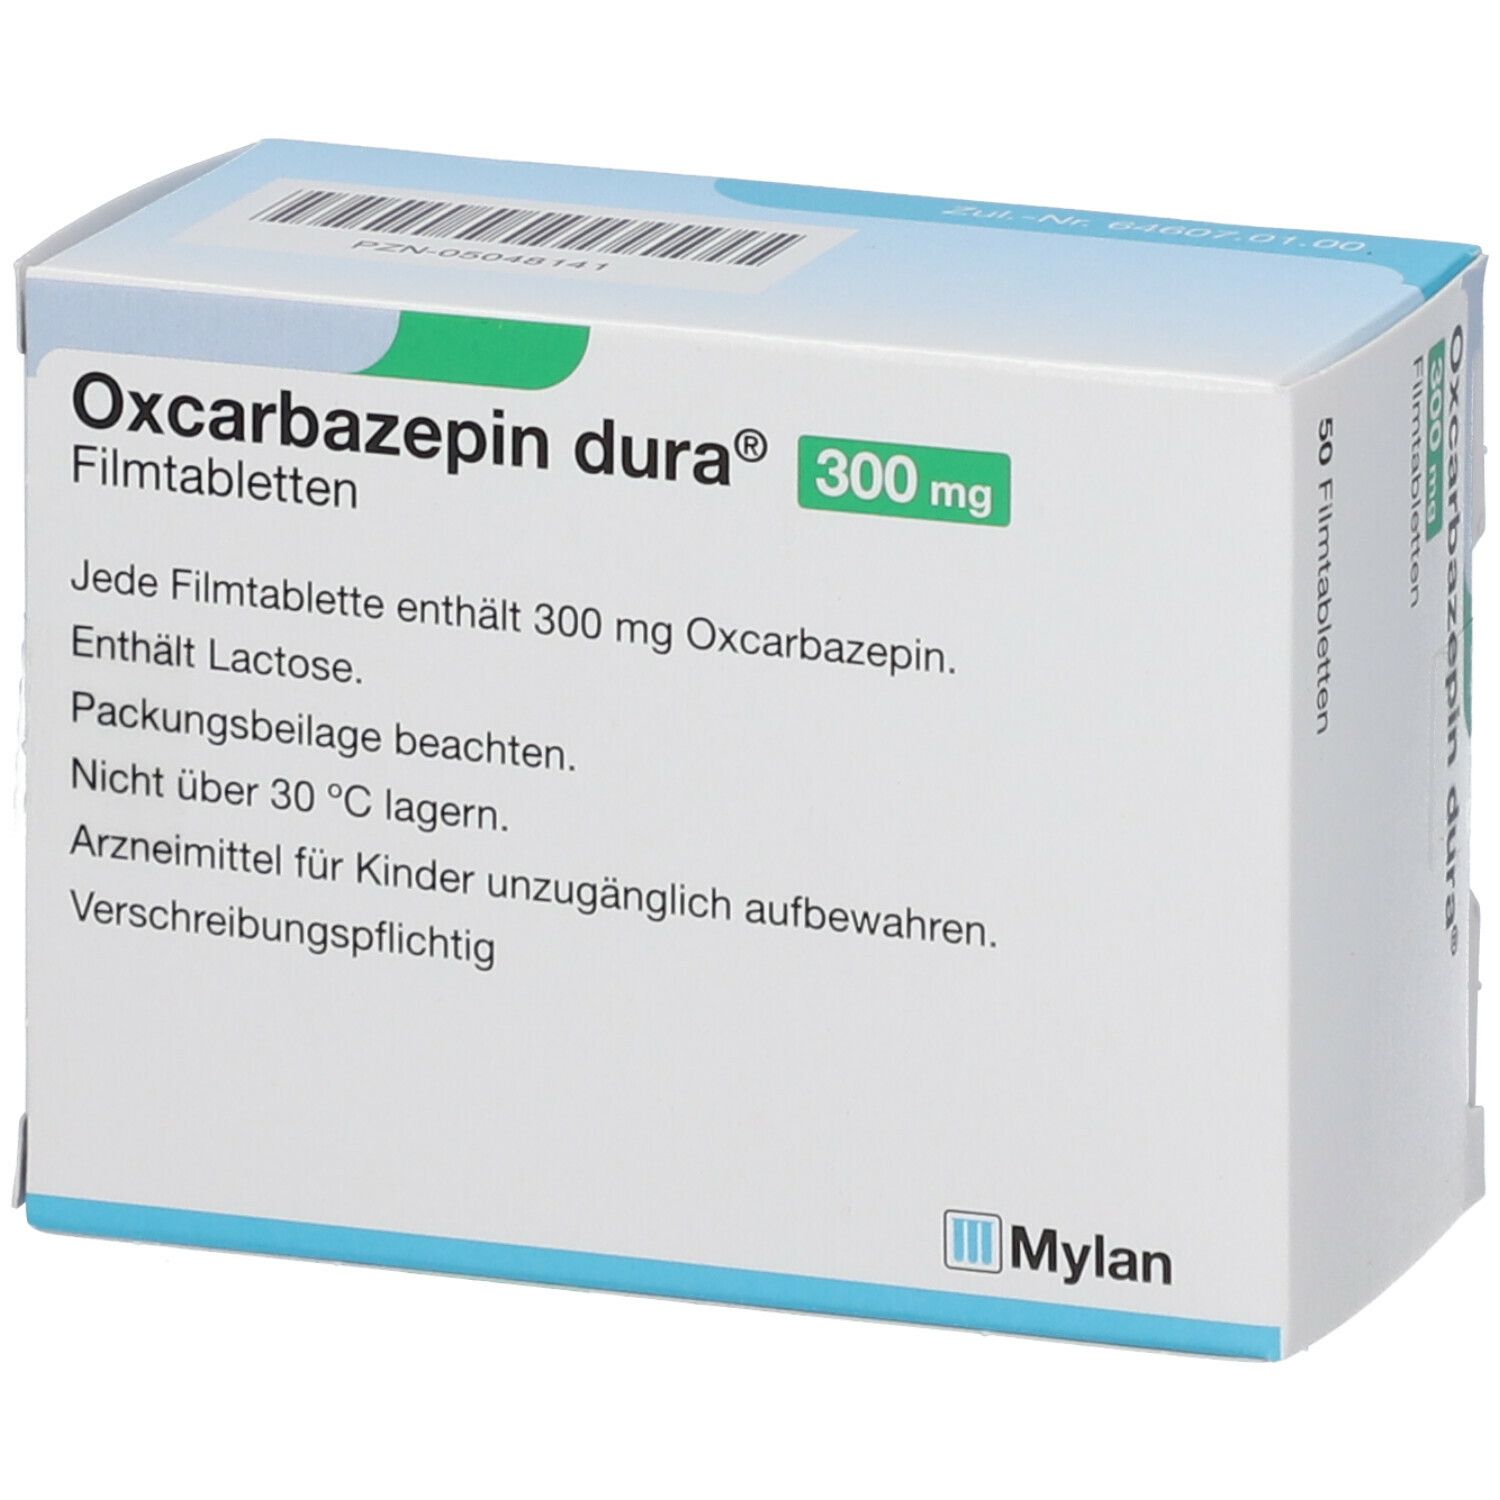 Oxcarbazepin dura® 300 mg